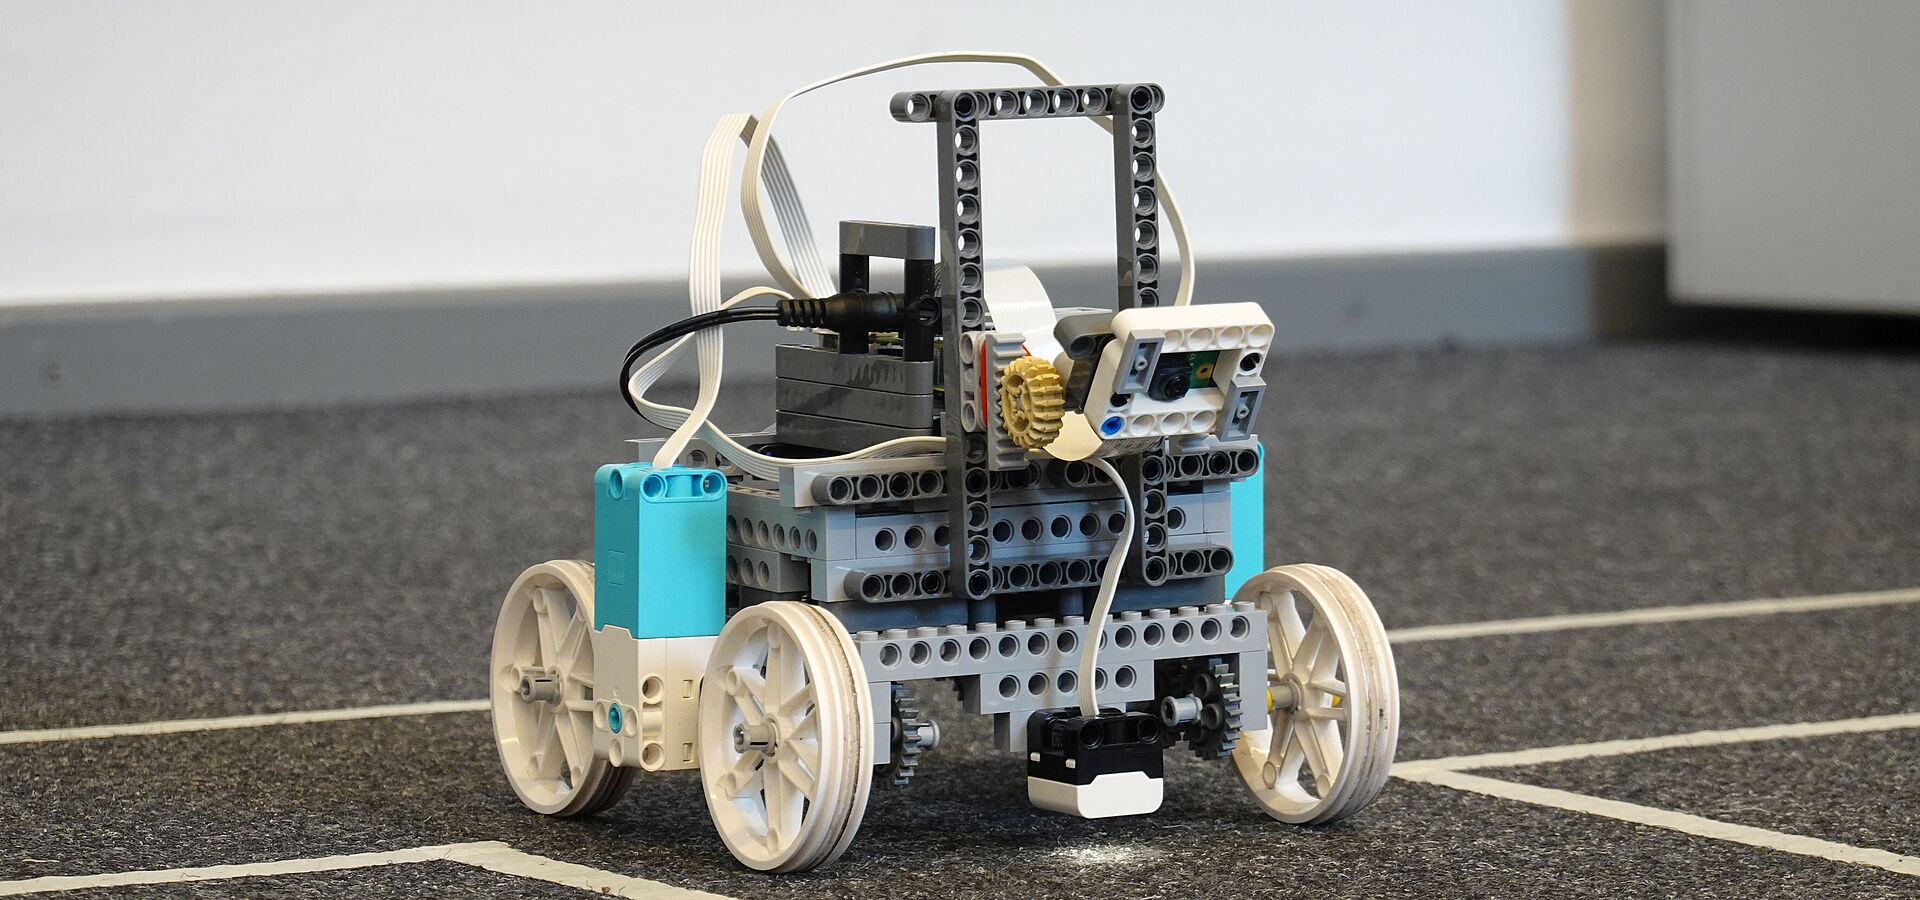 Ein autonom fahrender Lego-Roboter